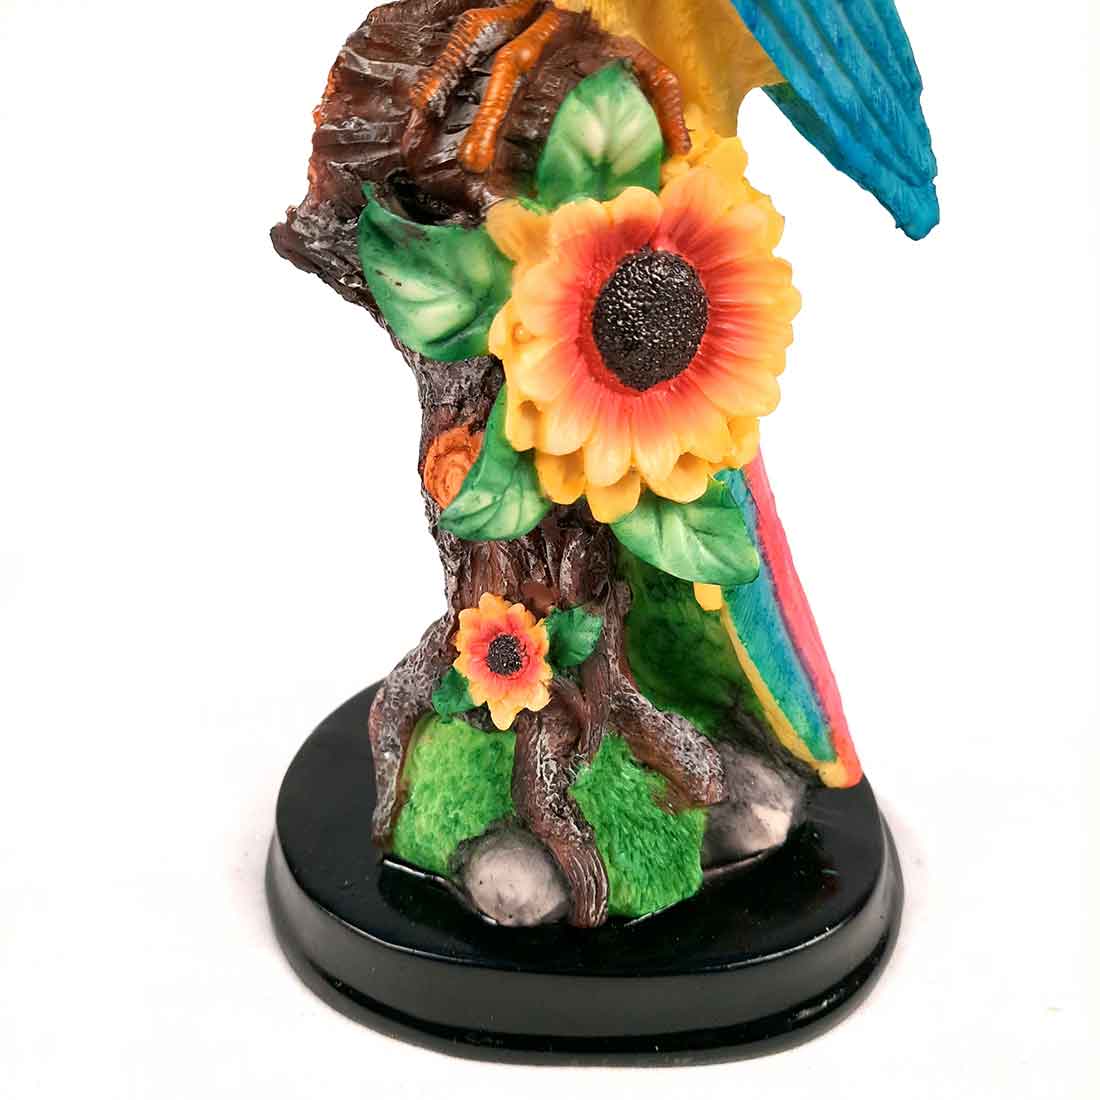 Decorative Parrot Showpiece - For Home, Table, Graden Decor & Gifts - 13 Inch - Apkamart #Color_Pink